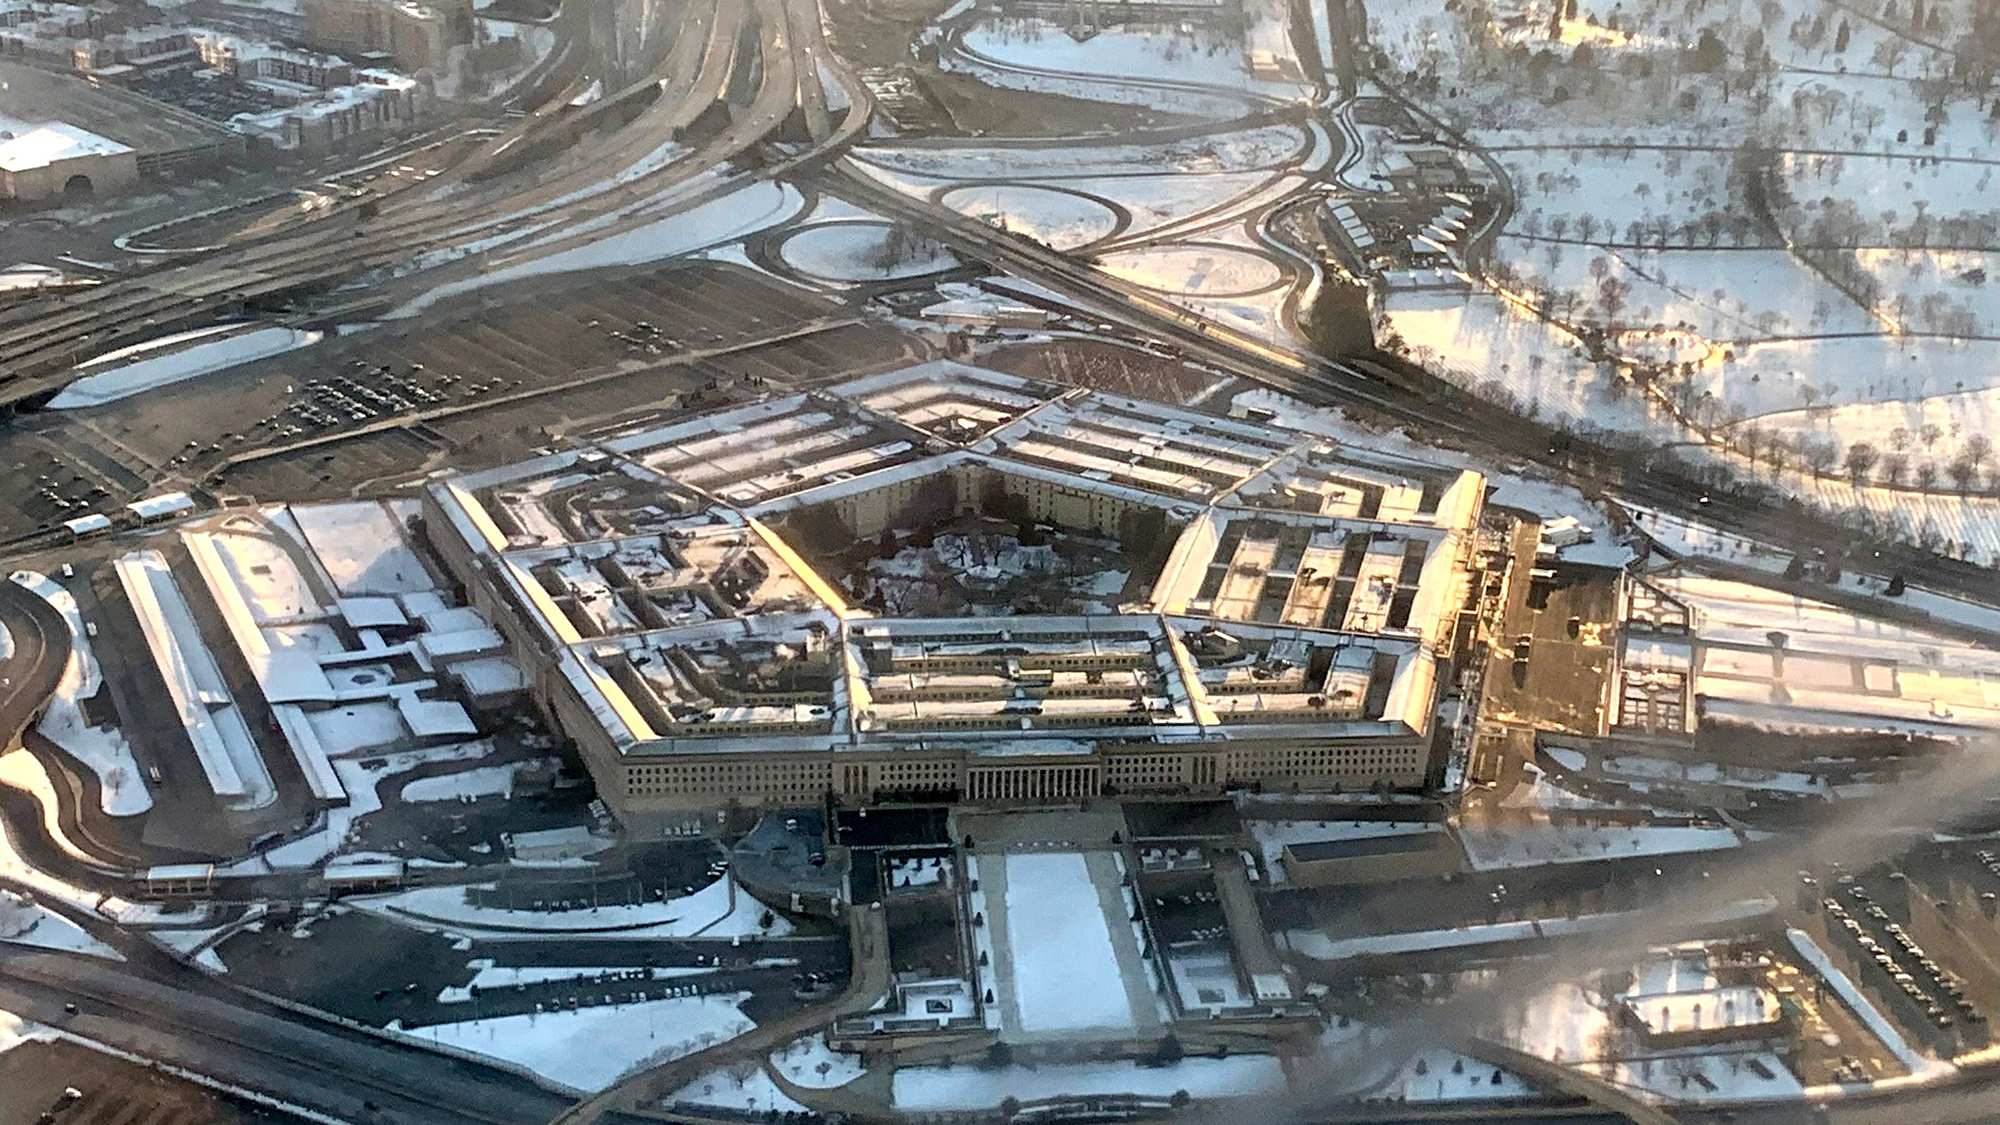 The Pentagon (US Department of Defense) in Washington, DC.